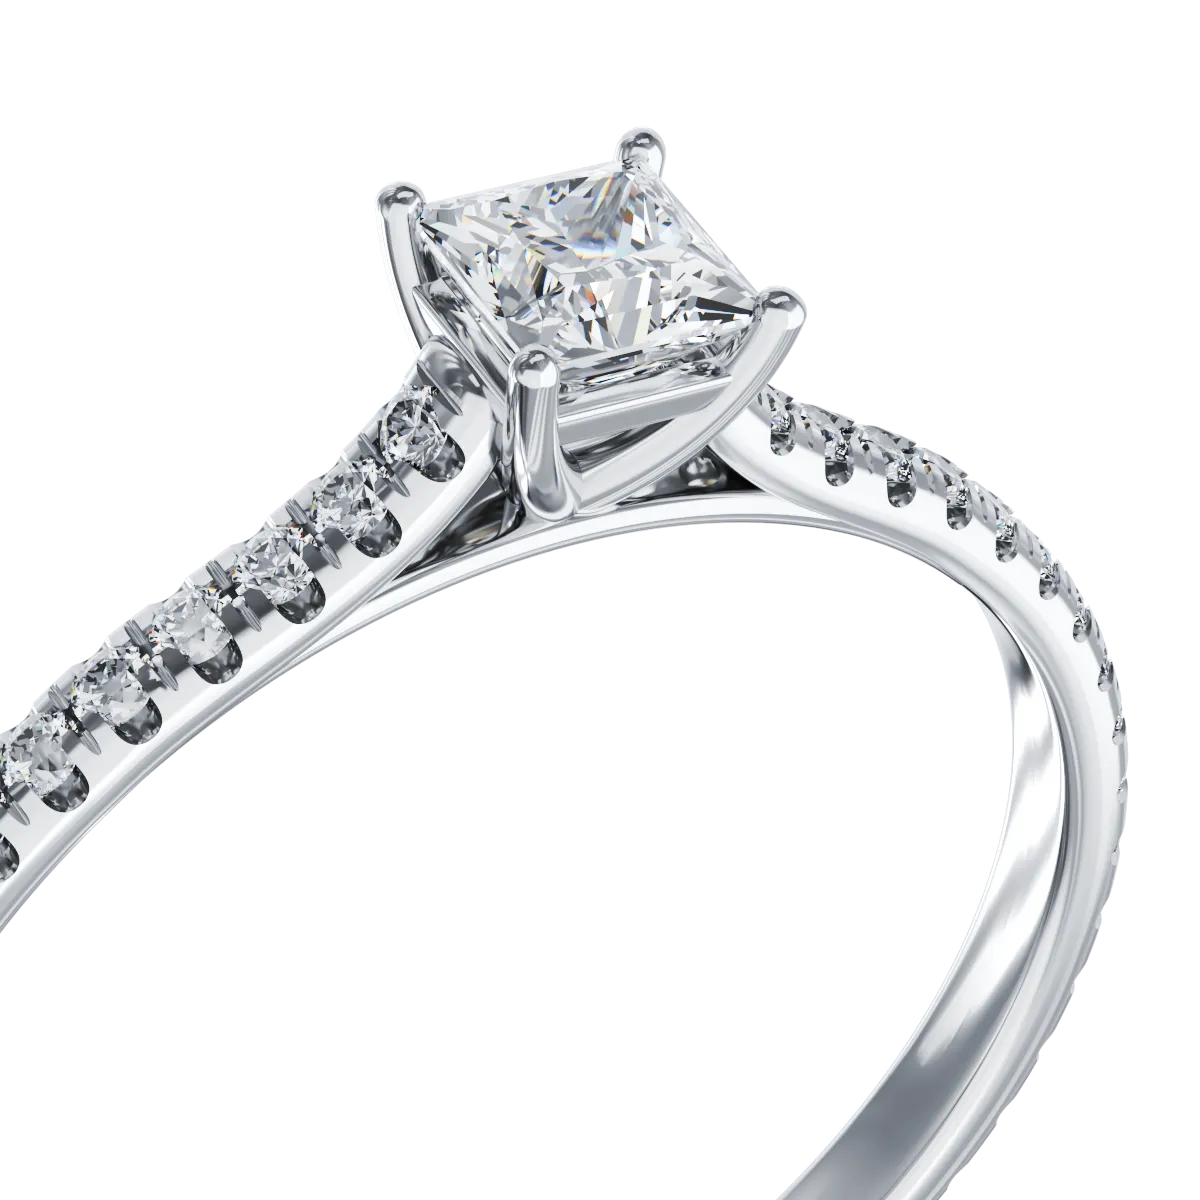 Platinum engagement ring with 0.25ct diamond and 0.16ct diamonds